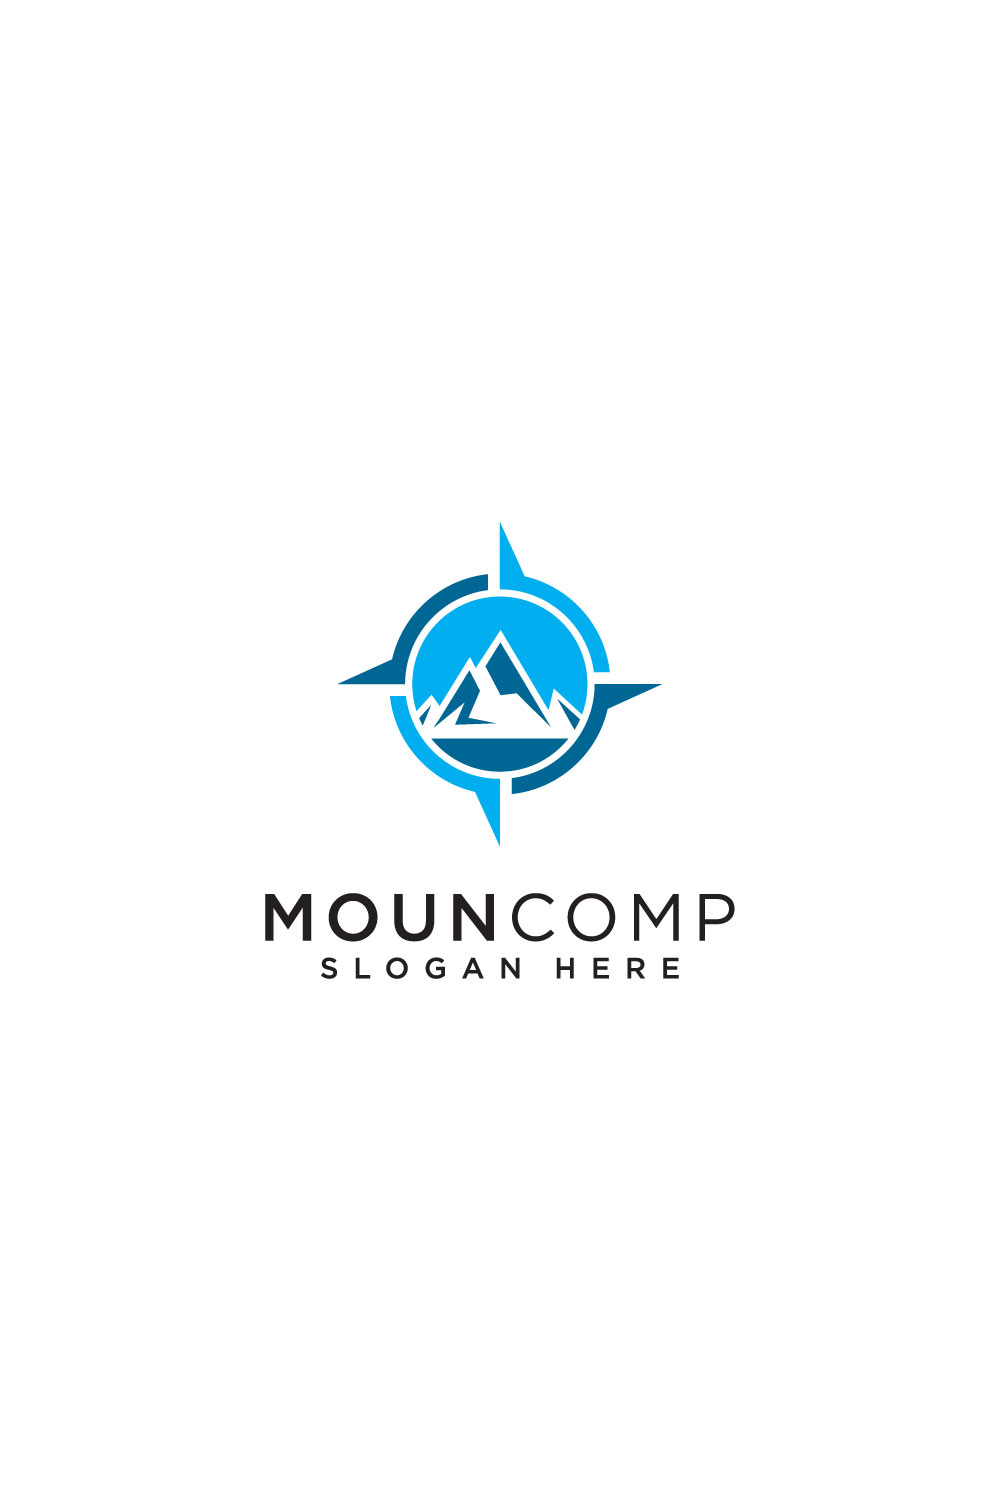 compass and mountain logo vector design pinterest preview image.